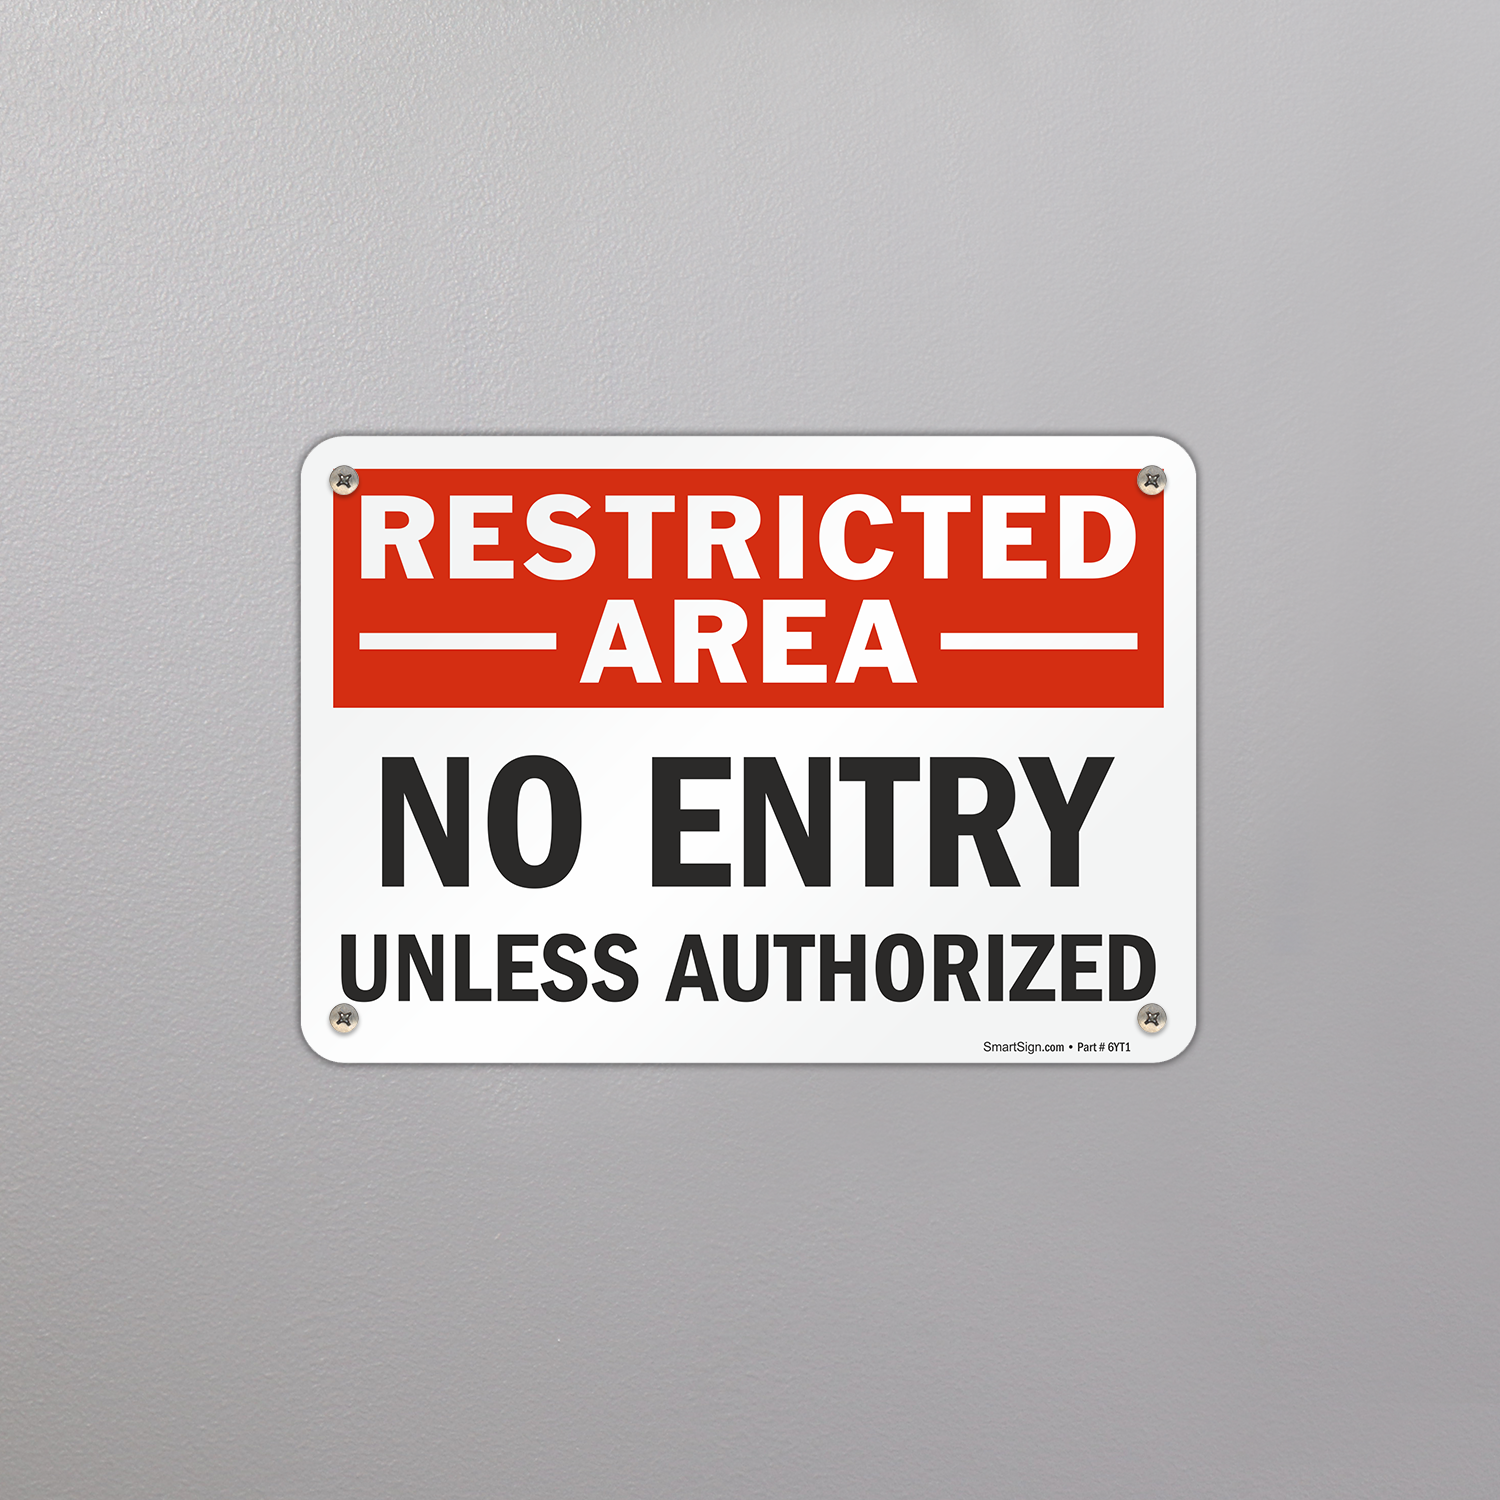 No Entry Unless Authorized Notice OSHA/ANSI Label Decal Sticker 8 